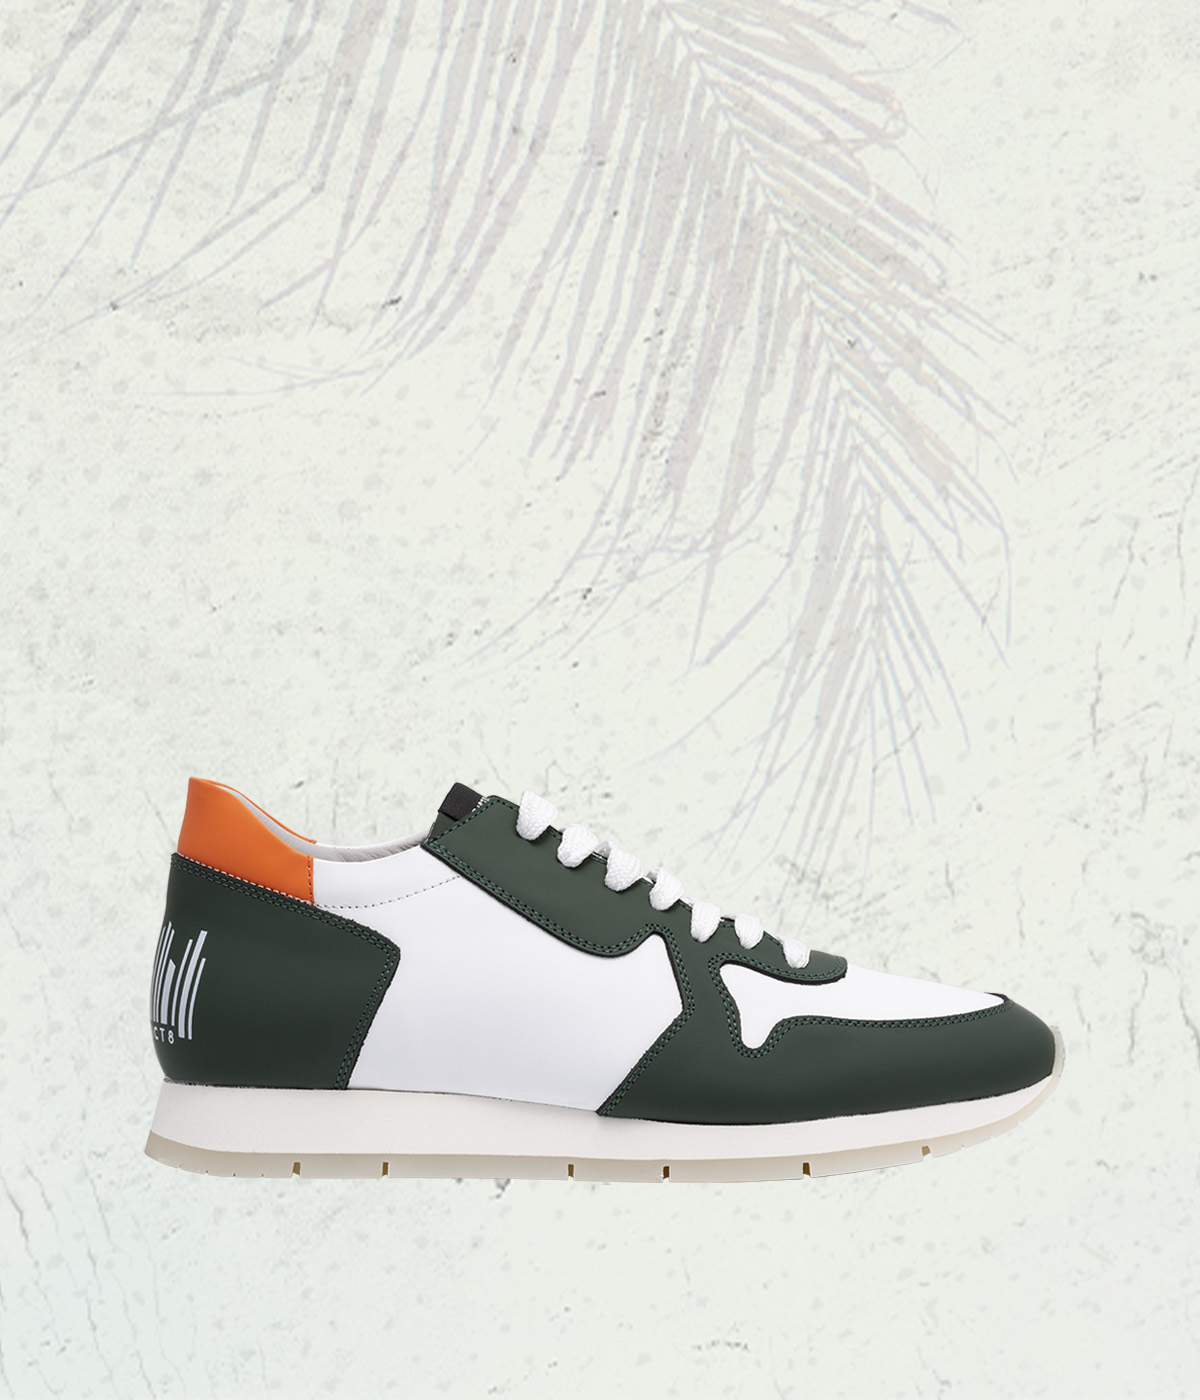 DISTRICT8 - Sneakers Traffic Light (821) in pelle gommata bianca/verde e spoiler arancio